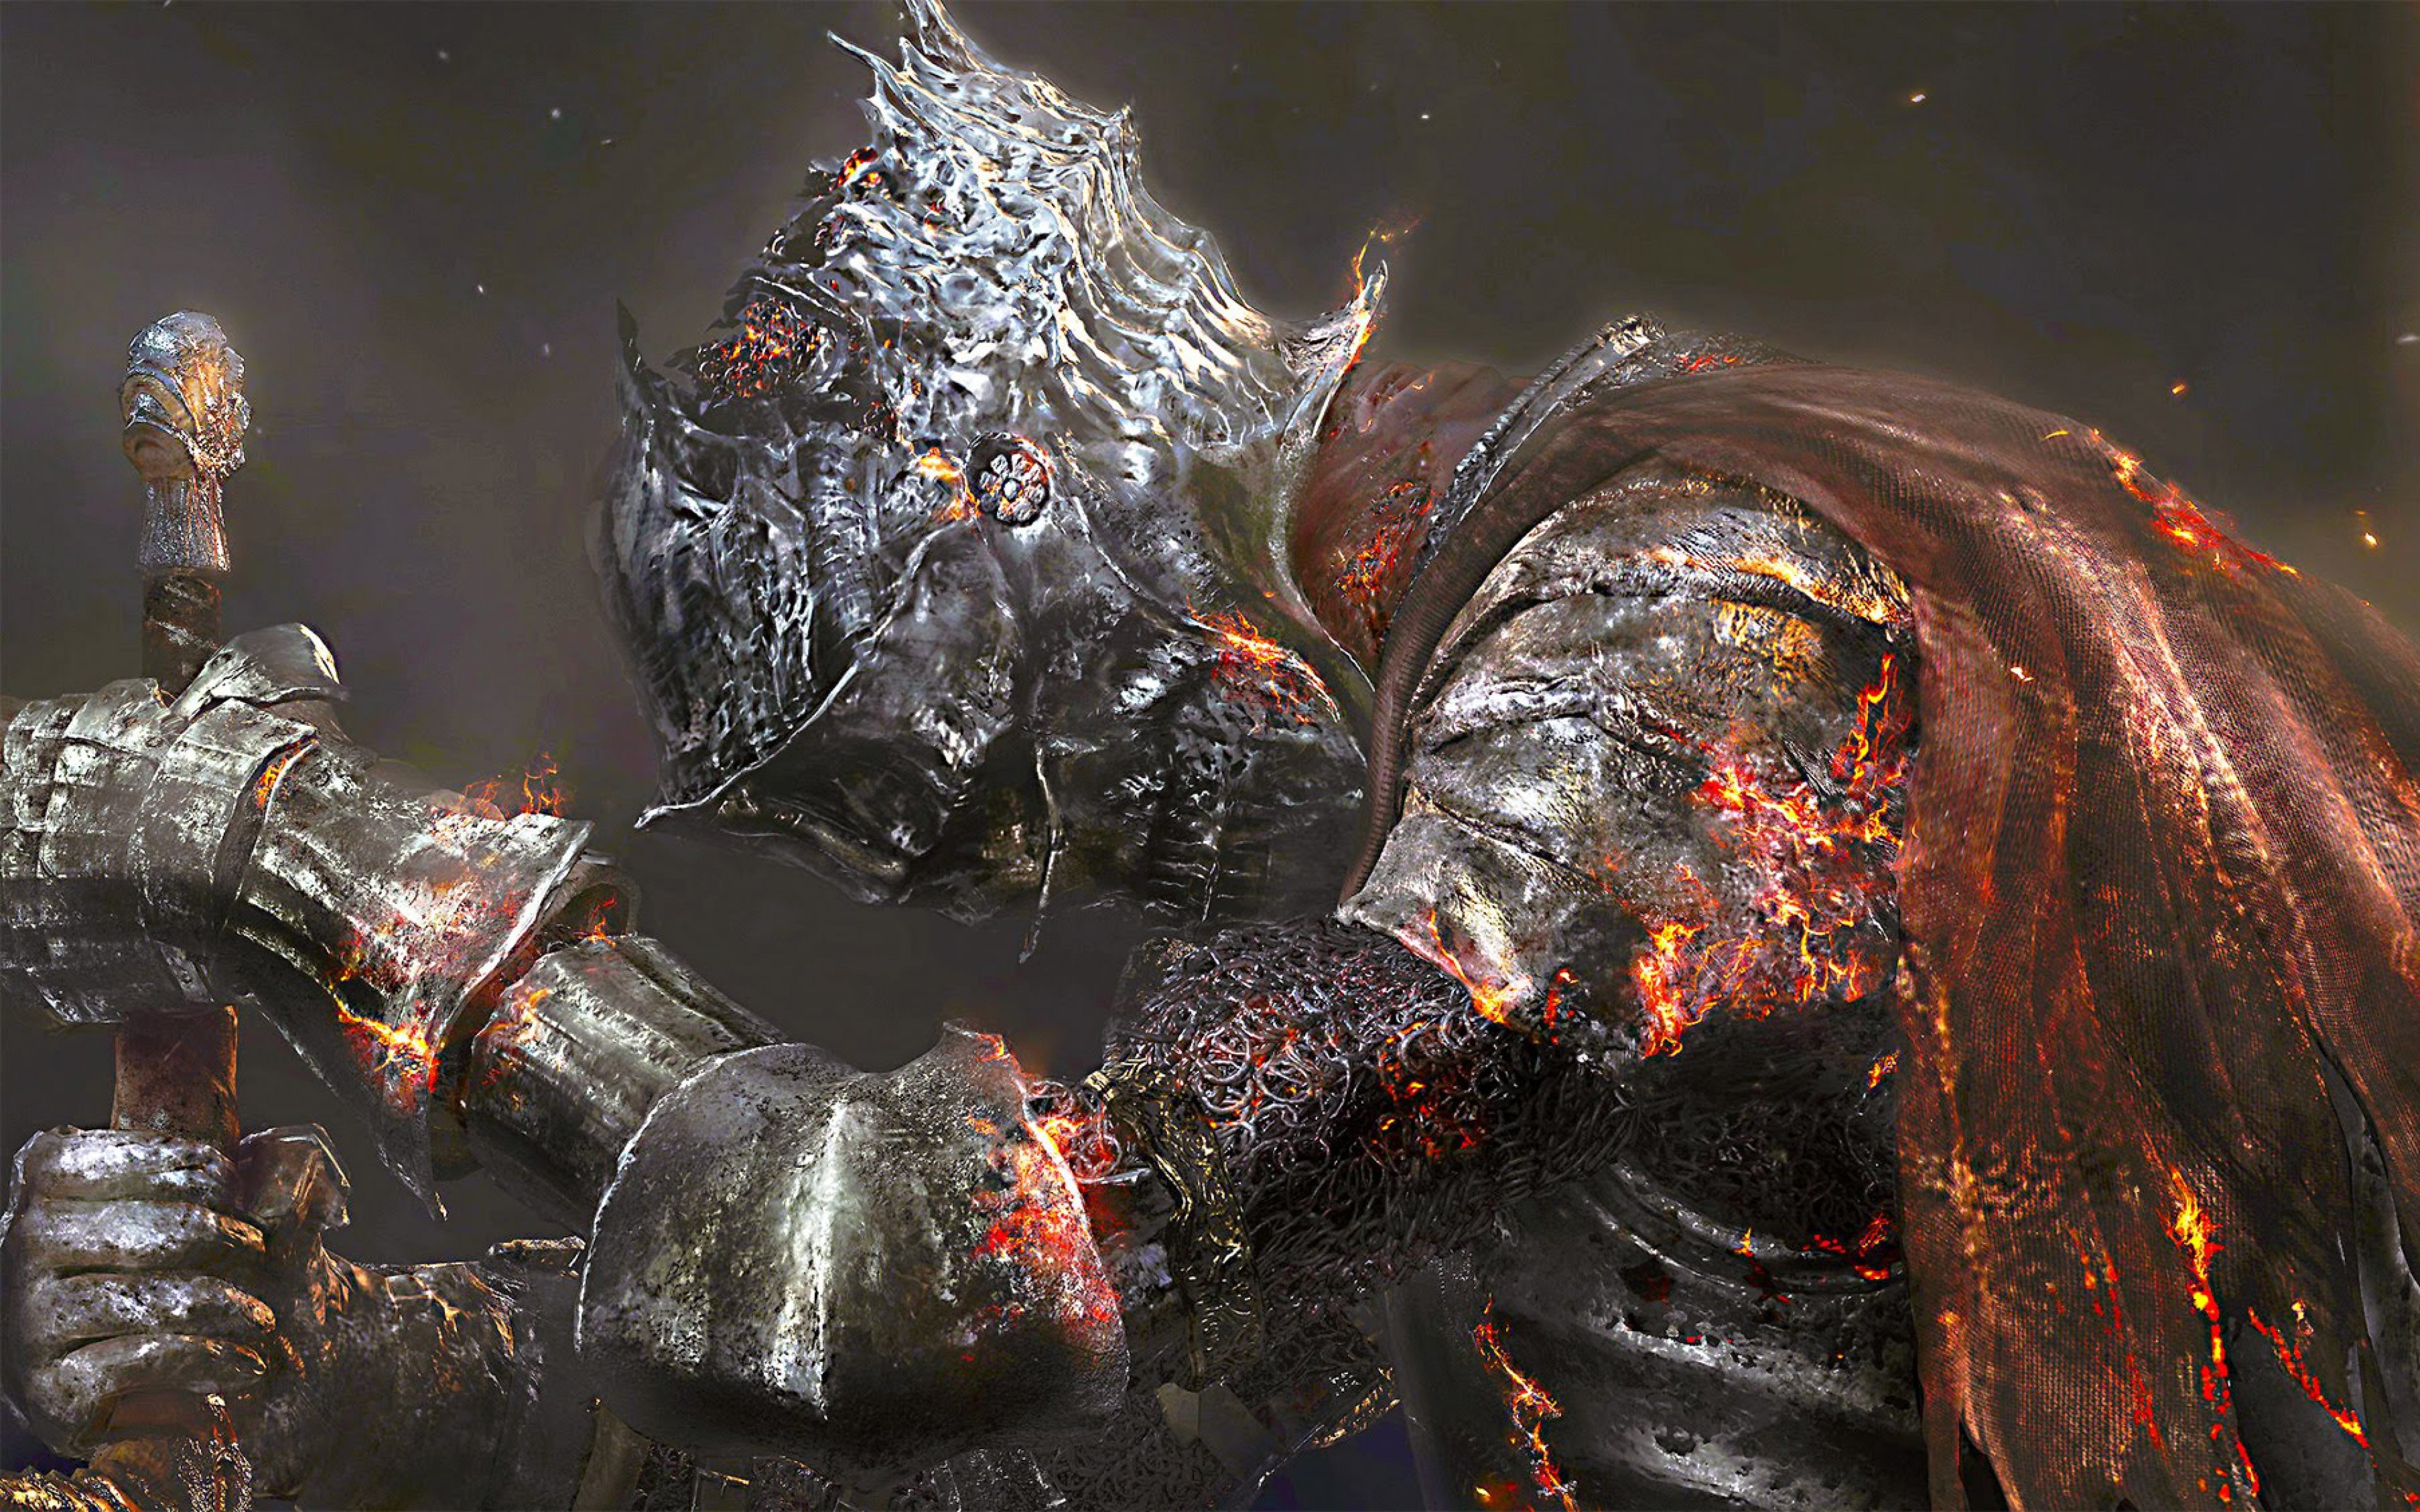 Dark Souls 3 Game Warrior 4K Wallpaper free download in high quality